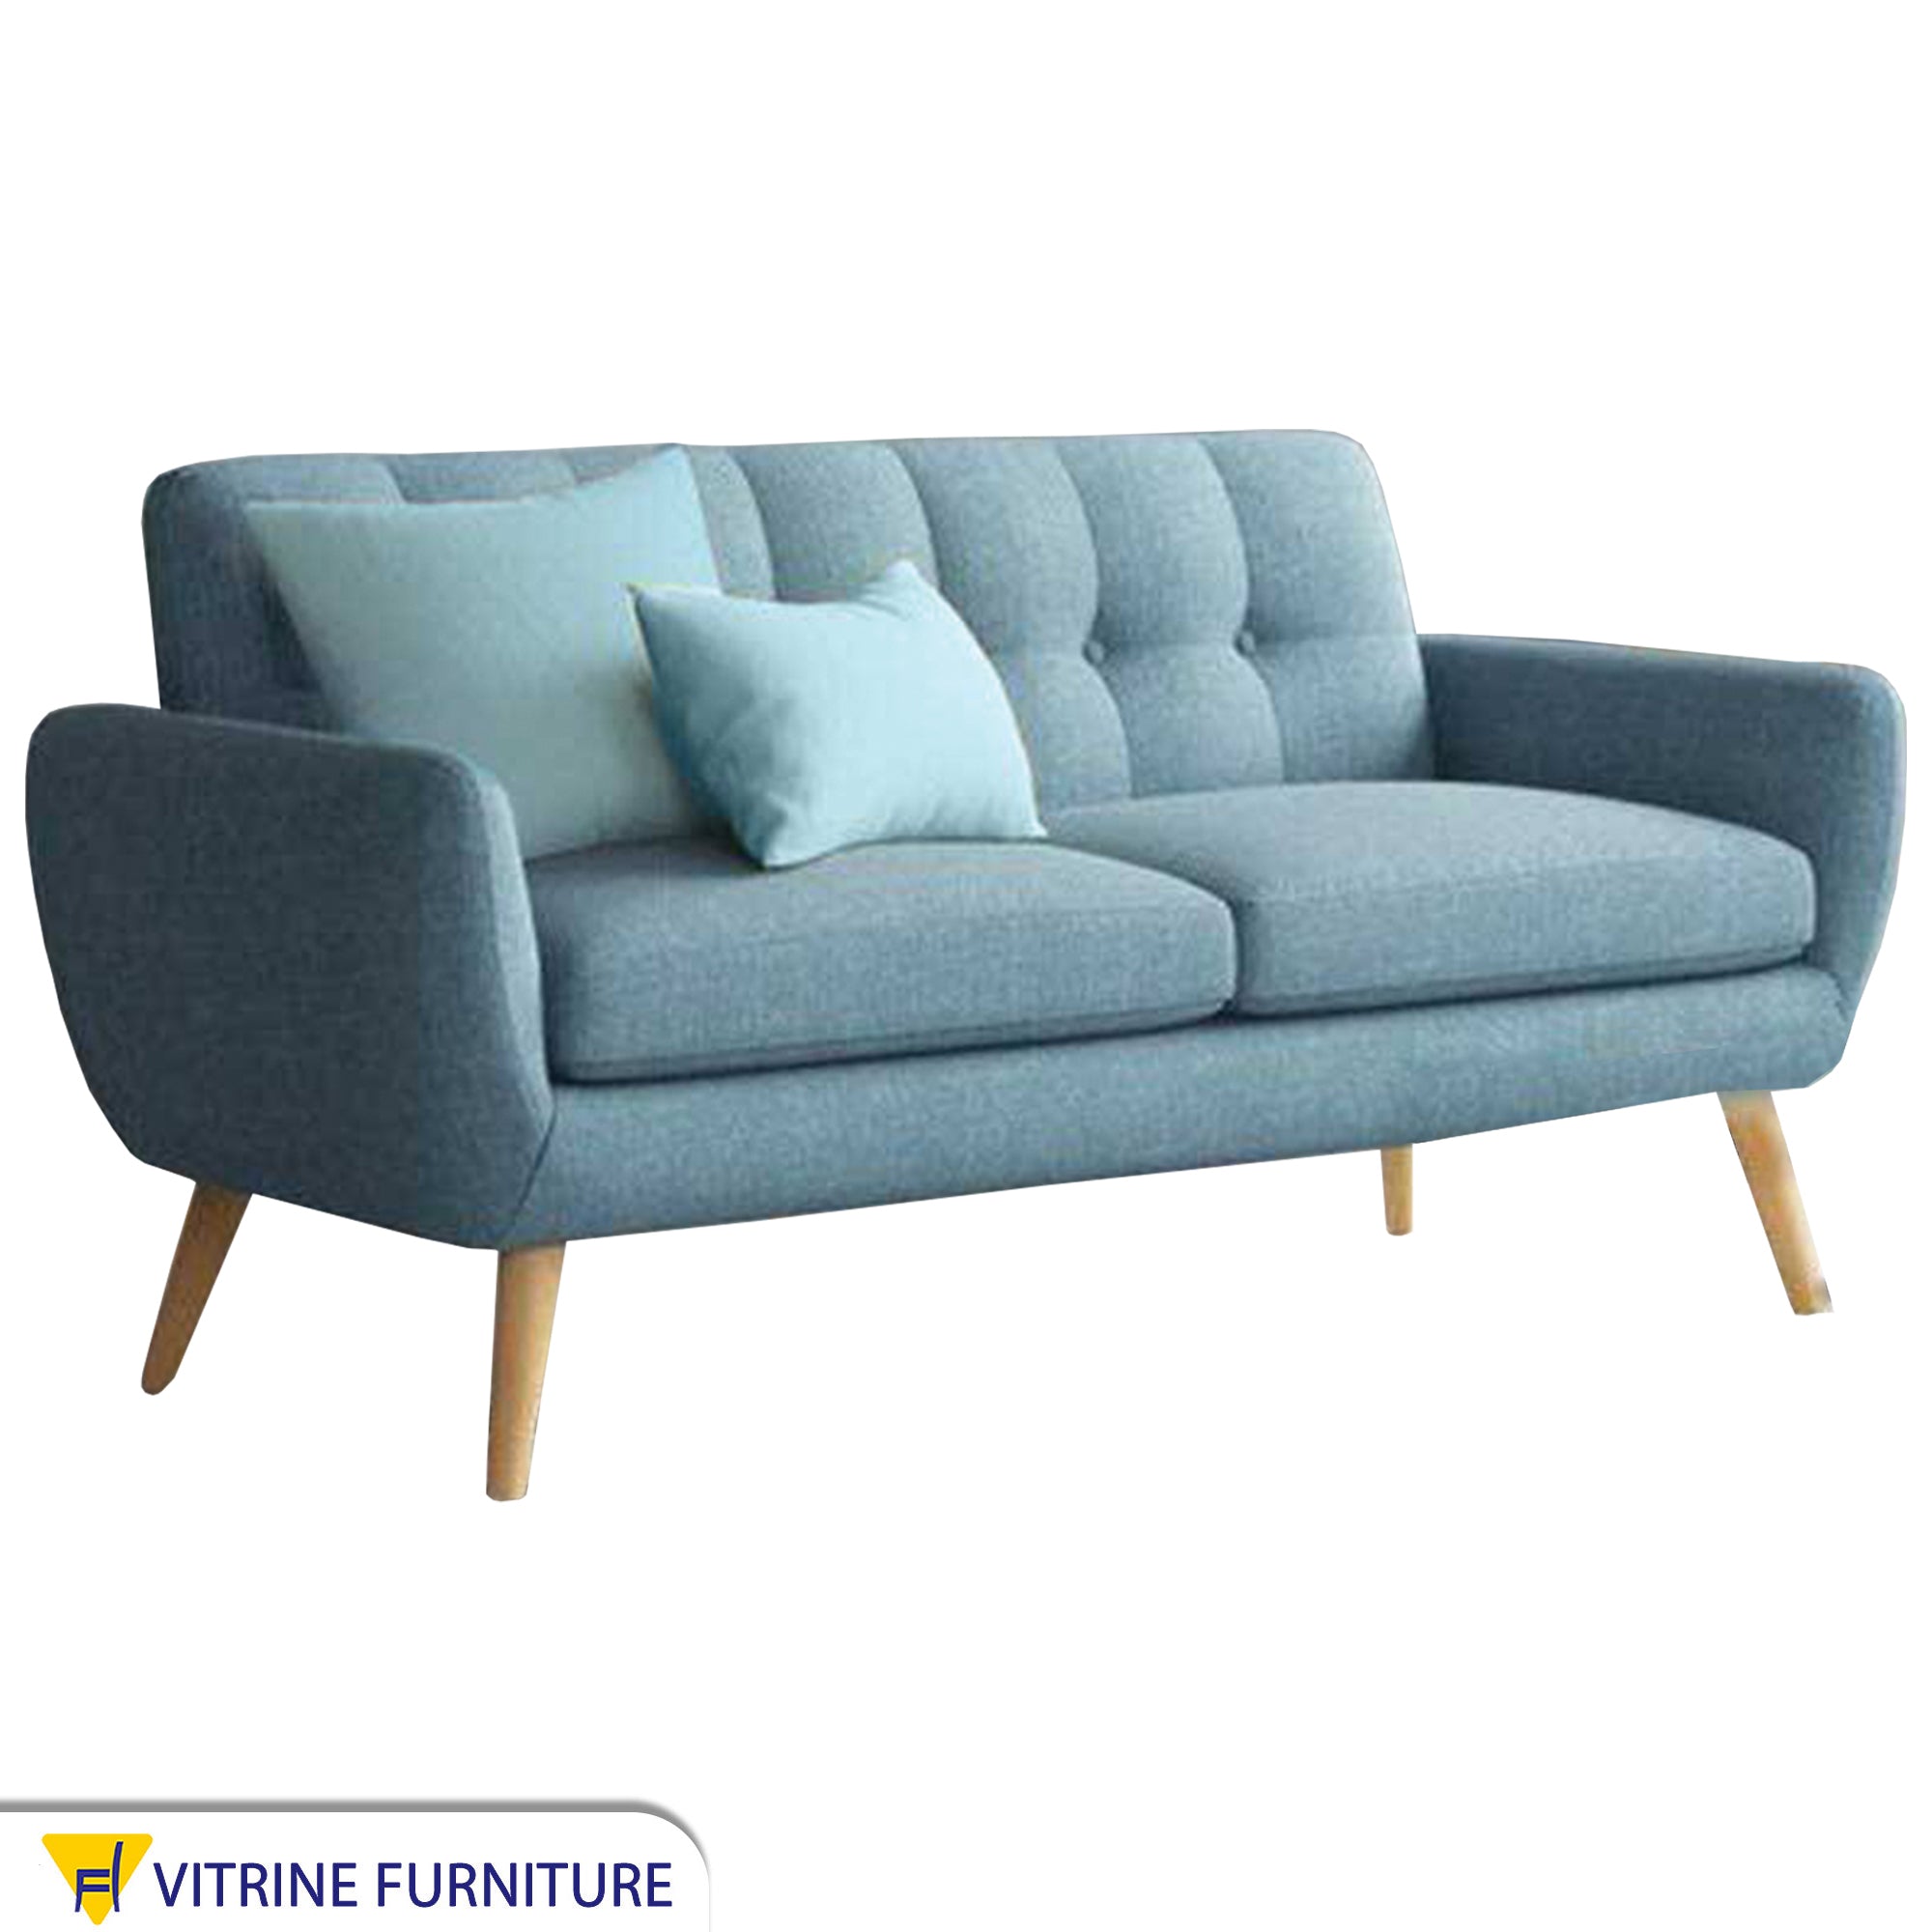 Baby blue double sofa